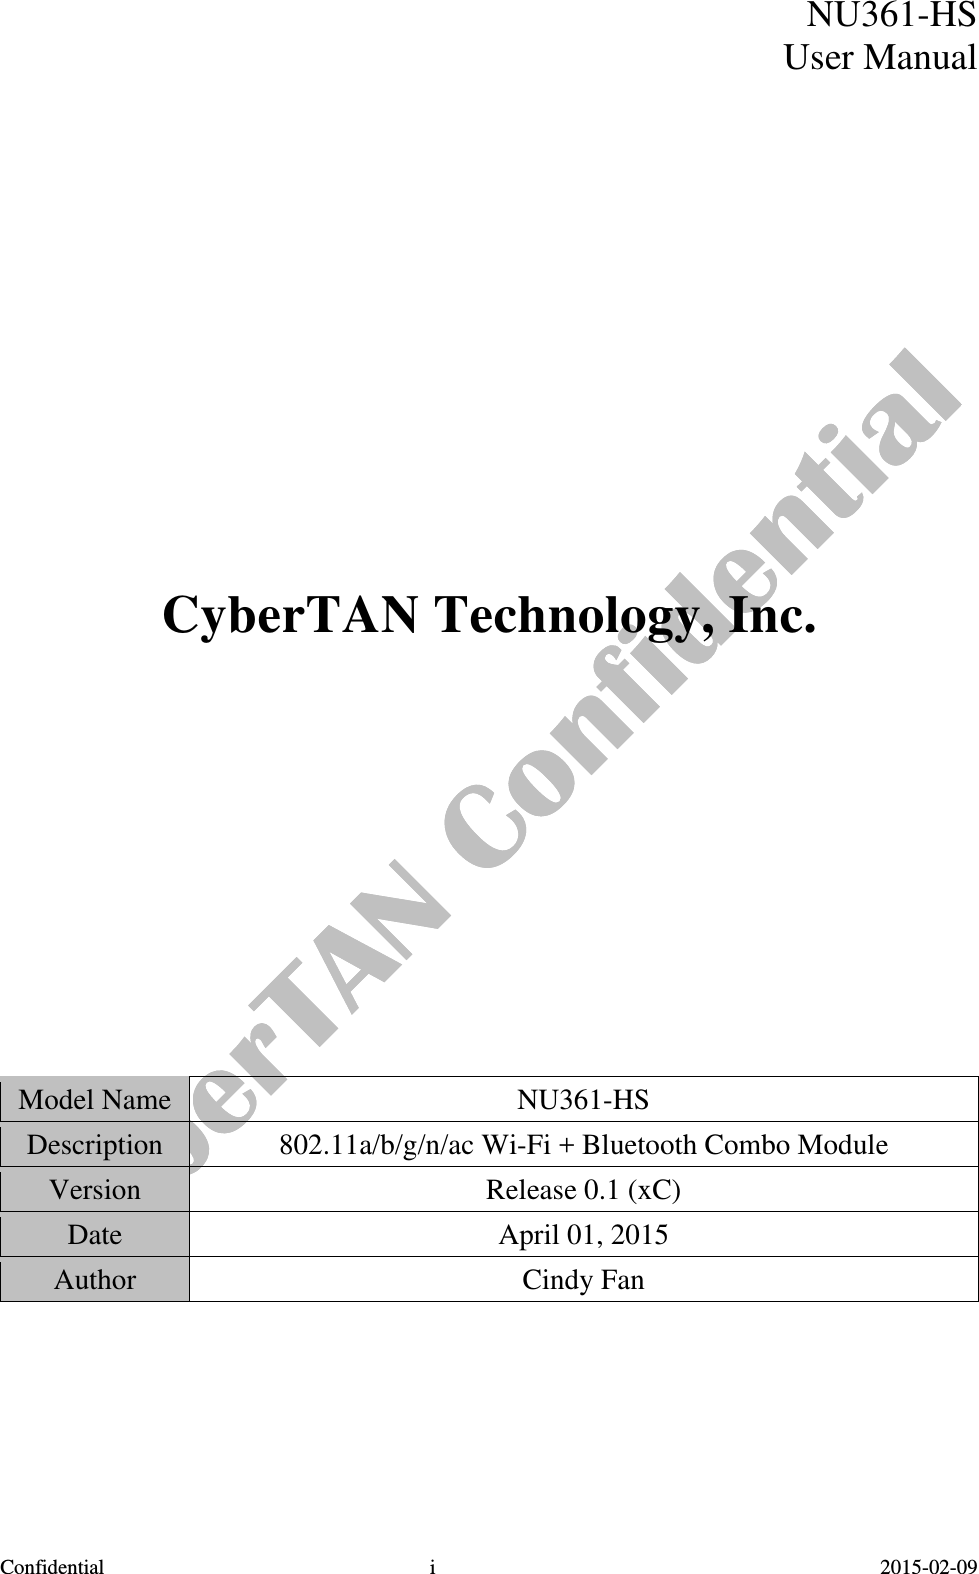  Confidential i  2015-02-09 NU361-HSUser Manual                CyberTAN Technology, Inc.                 Model Name  NU361-HS Description  802.11a/b/g/n/ac Wi-Fi + Bluetooth Combo Module Version  Release 0.1 (xC) Date  April 01, 2015 Author  Cindy Fan 